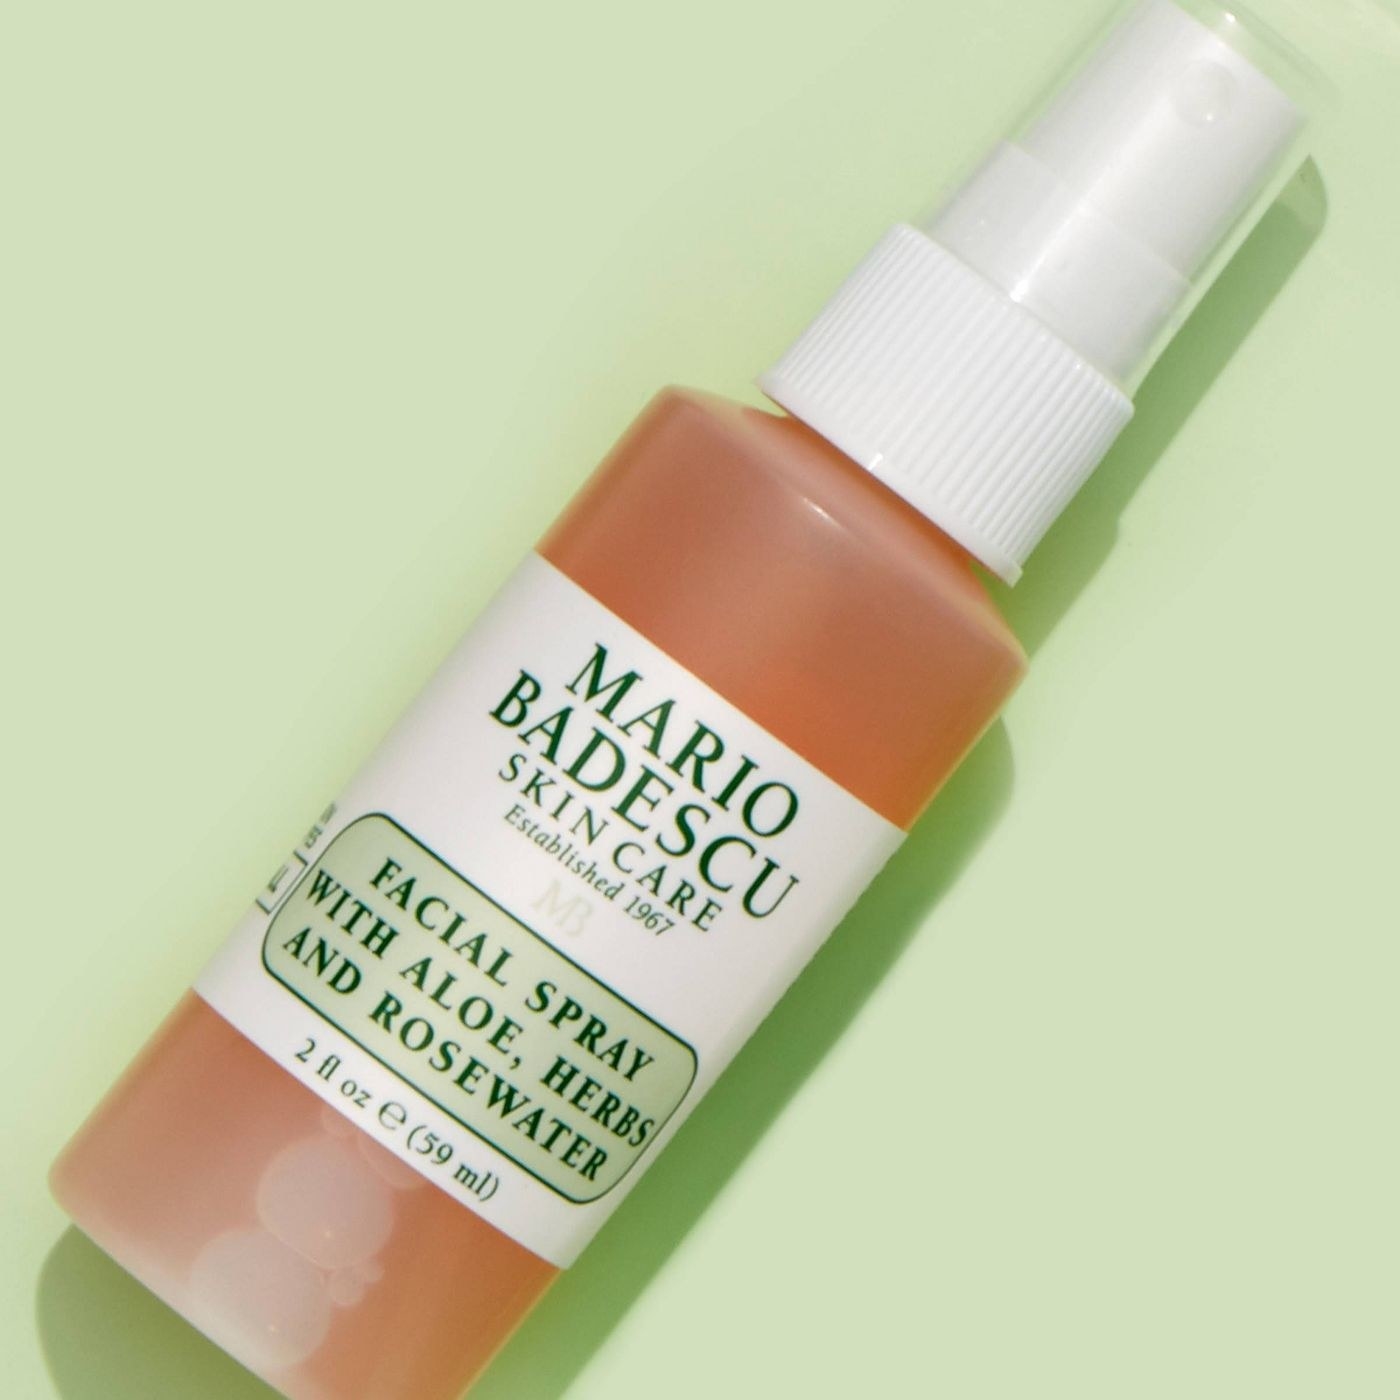 The Mario Badescu Skincare Facial Spray With Aloe, Herbs and Rosewater